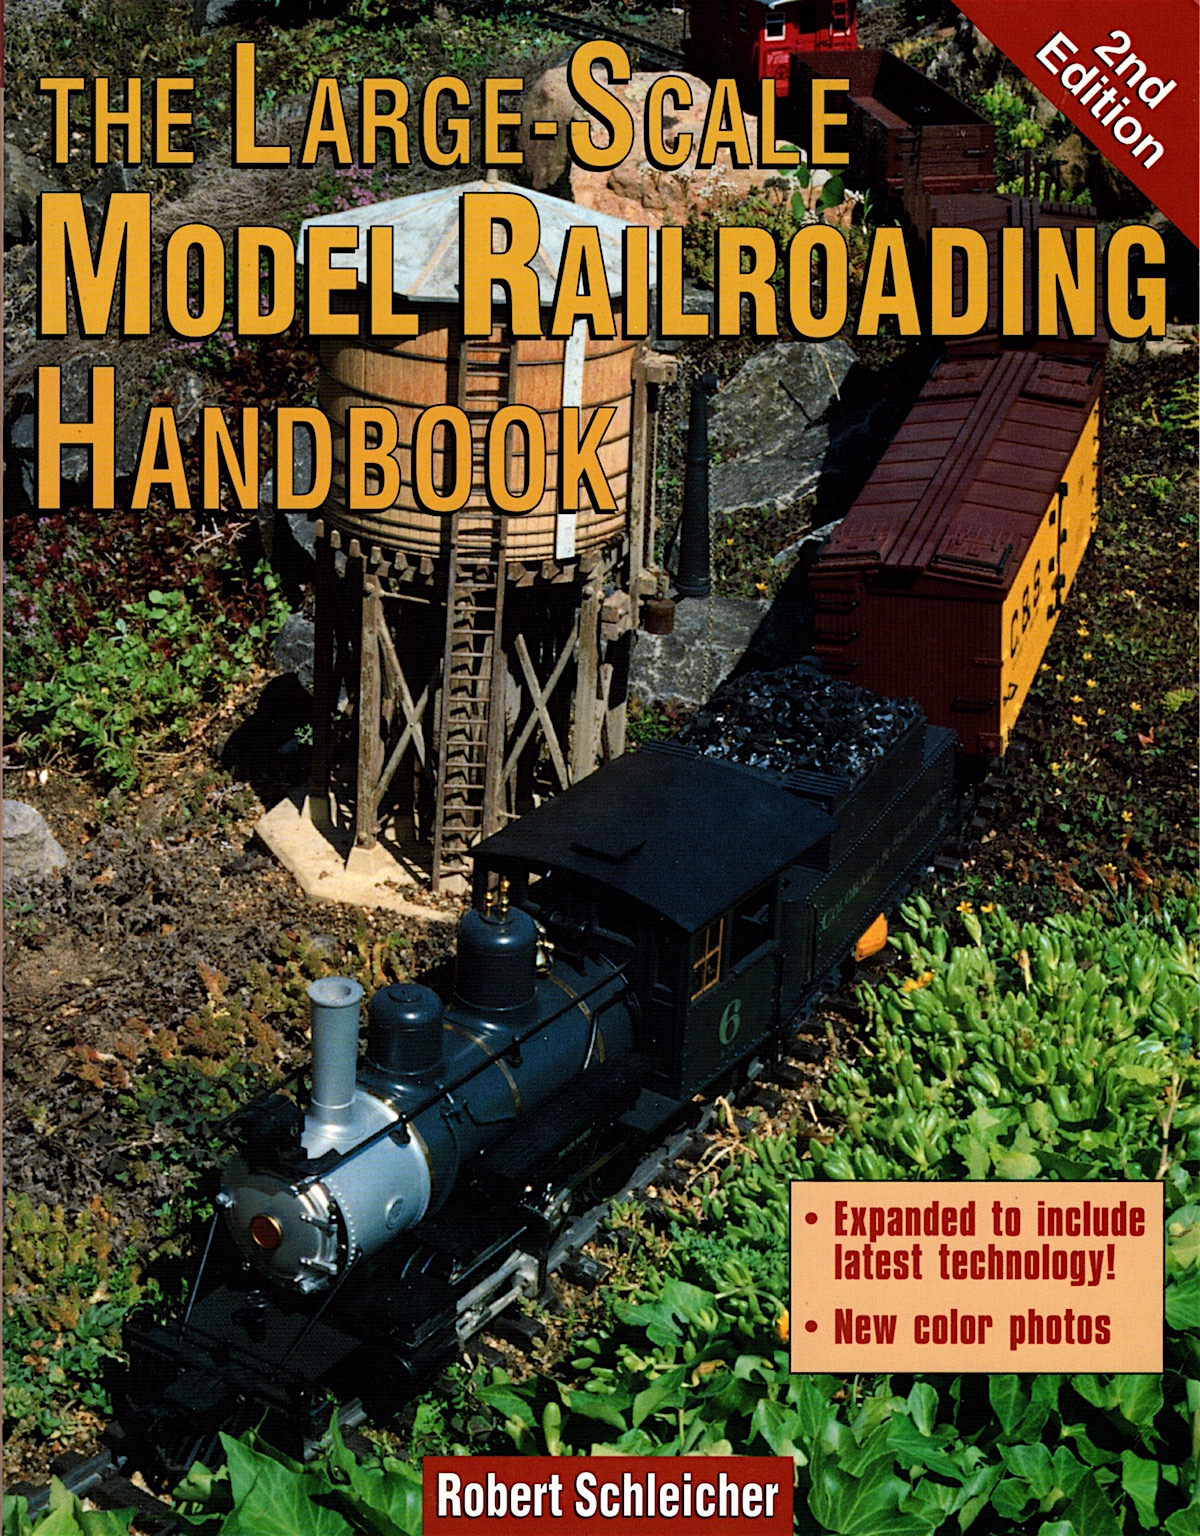 Gartenbahn (Large Scale) Handbook - 2000 The Large Scale Model Railroading Handbook